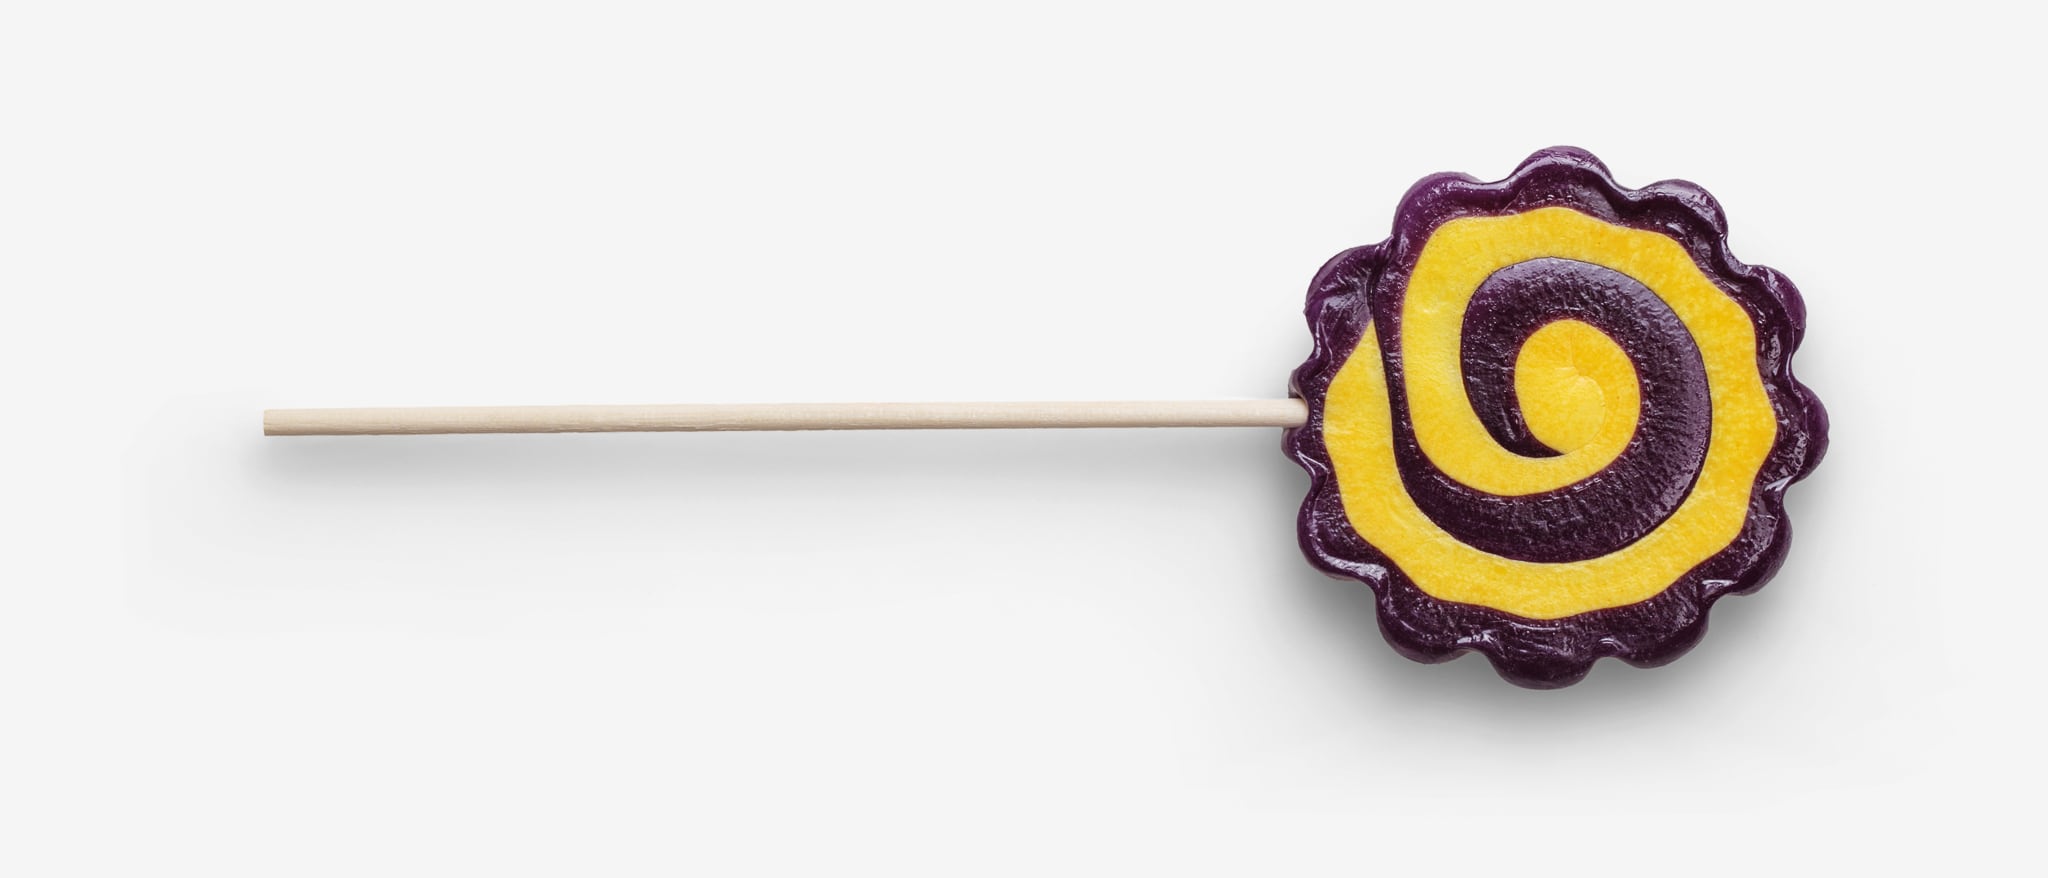 Lollipop image with transparent background